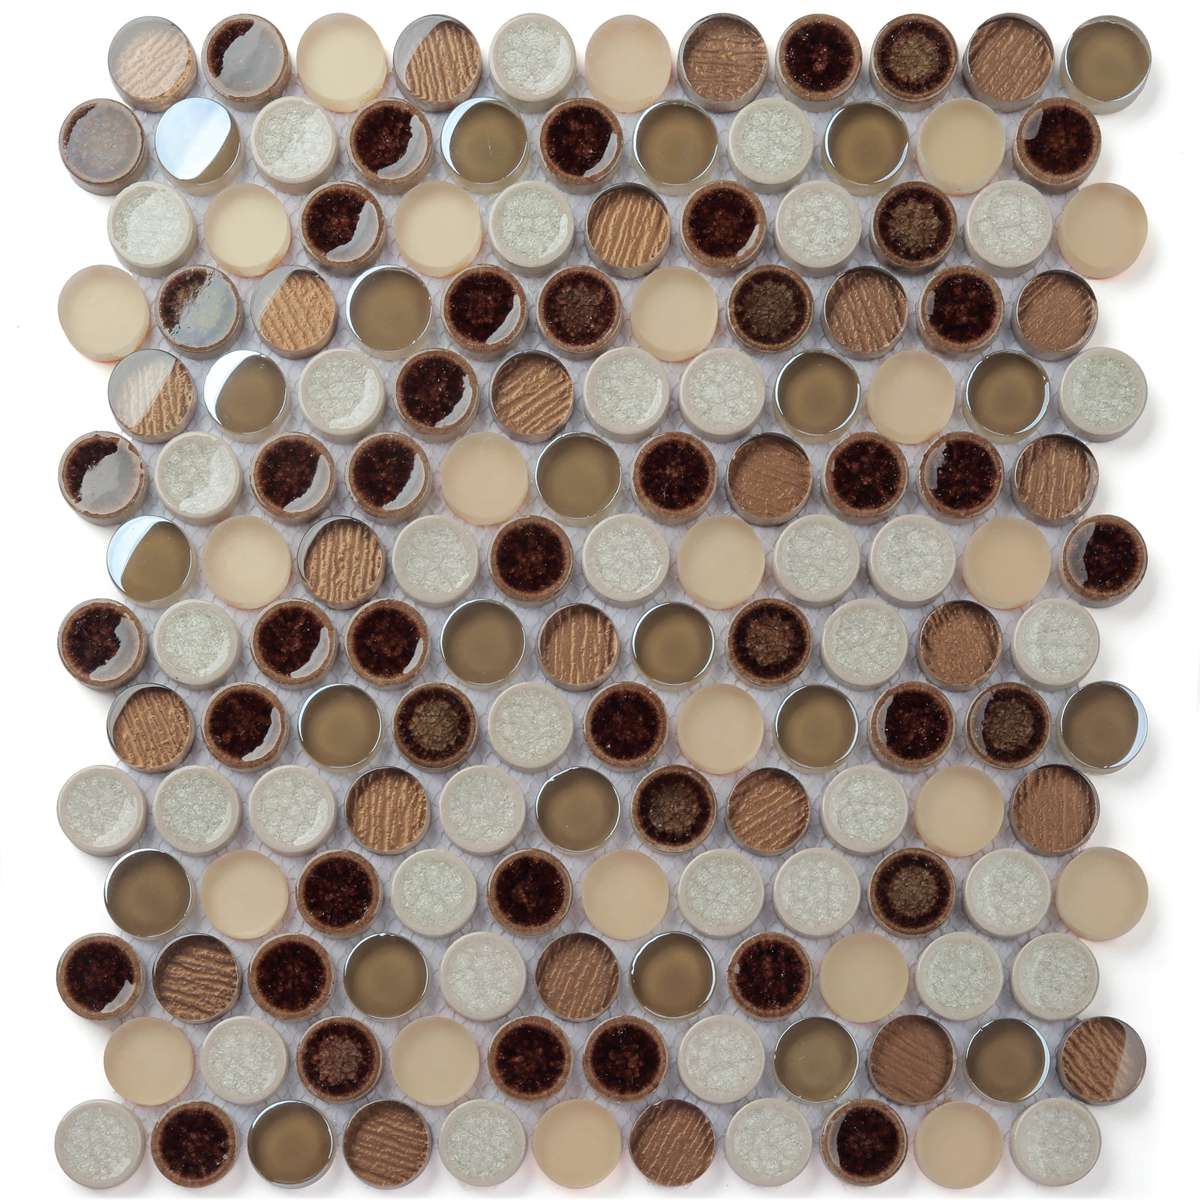 Porcelain penny round bathroom tiles